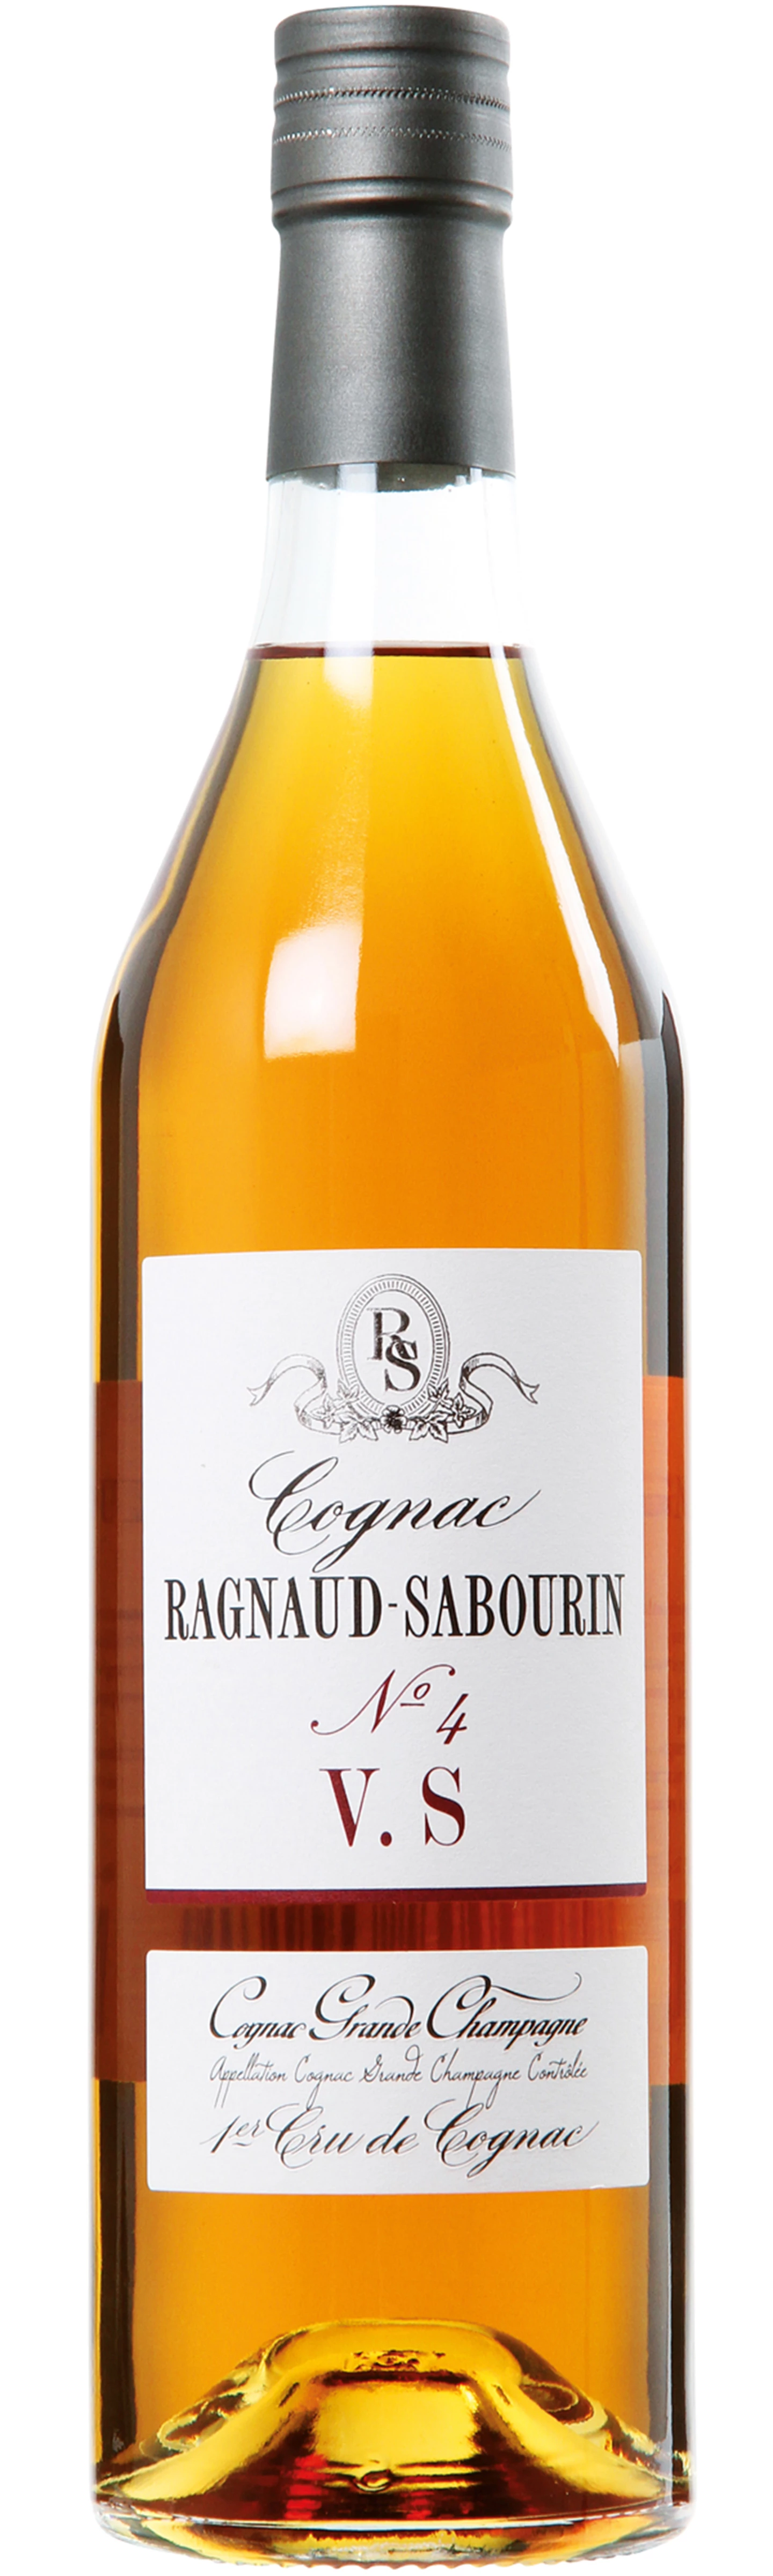 Løgismose Spiritus Ragnaud Sabourin Cognac No 4 VS - 128592